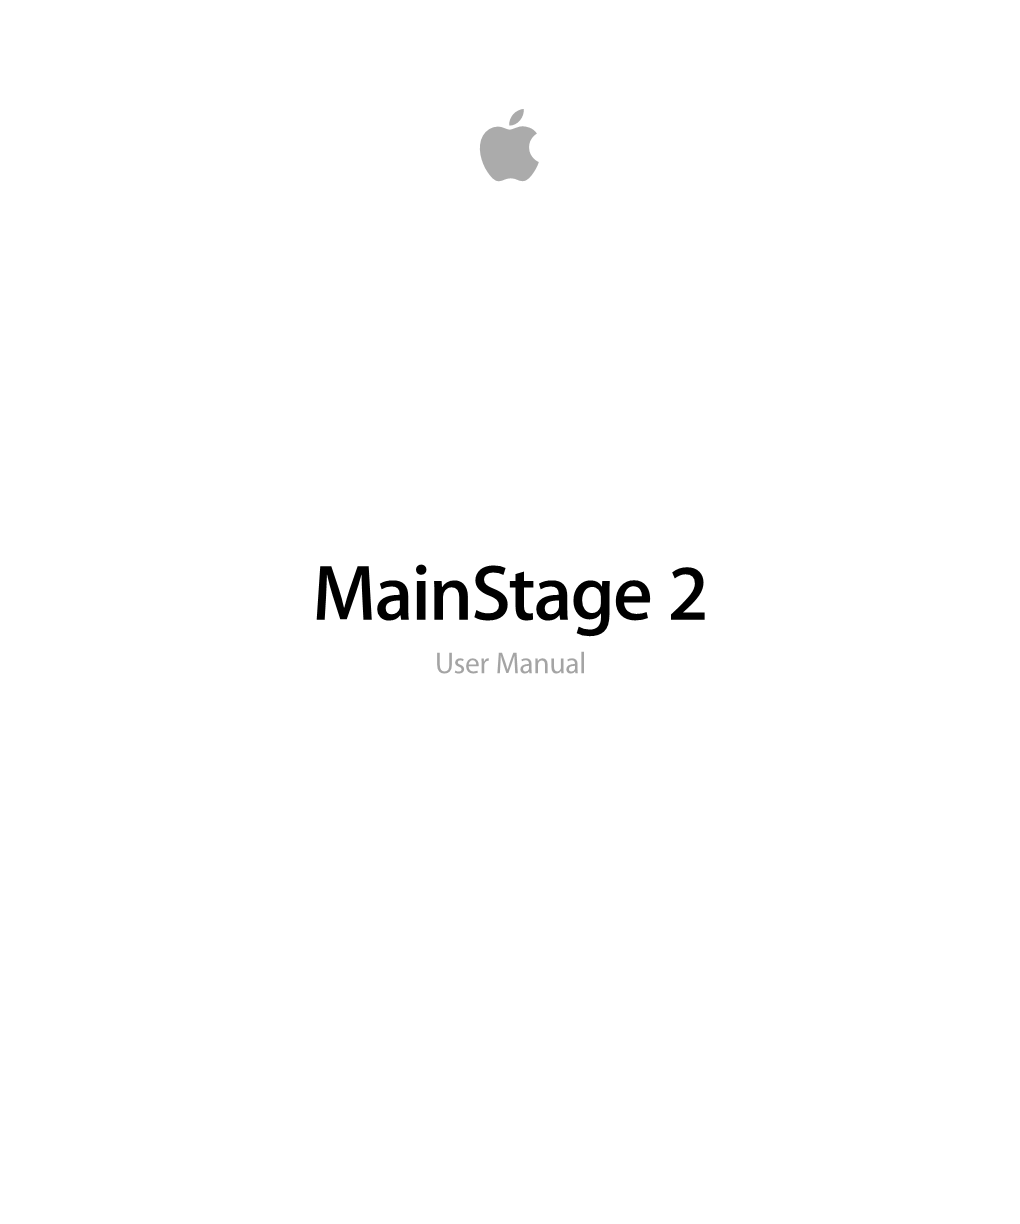 Mainstage 2 User Manual Copyright © 2011 Apple Inc